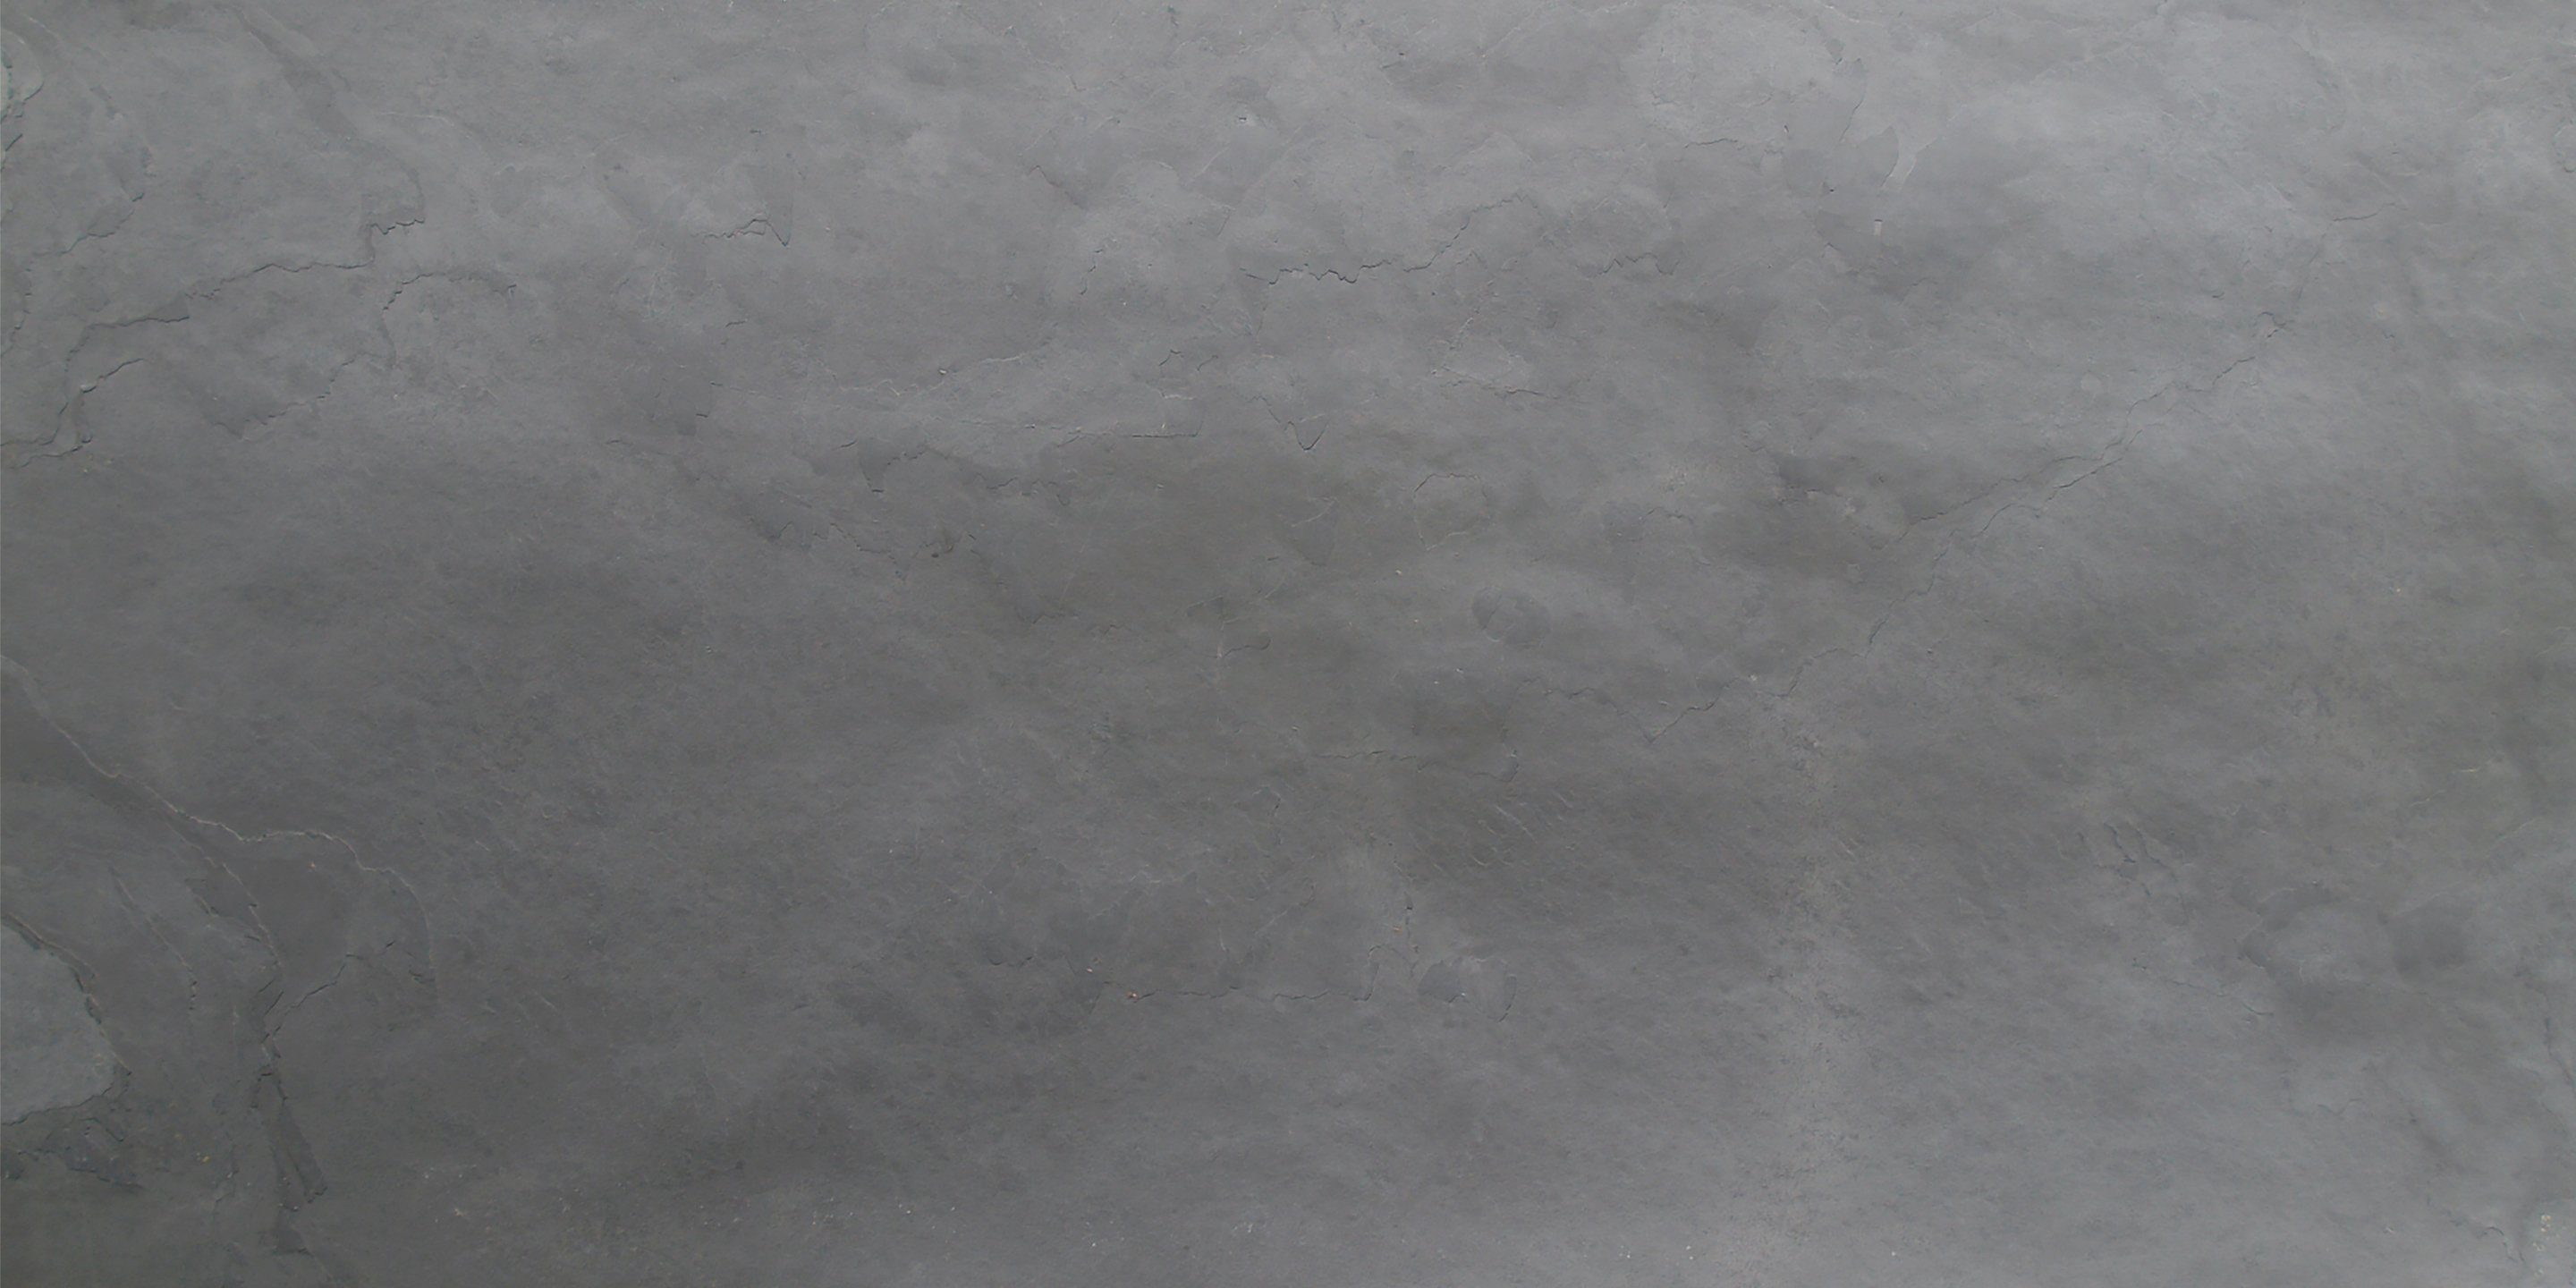 Slate Lite Wandpaneel Negro, BxL: 120x240 cm, 2,88 qm, (1-tlg) aus Echtstein | Wandpaneele